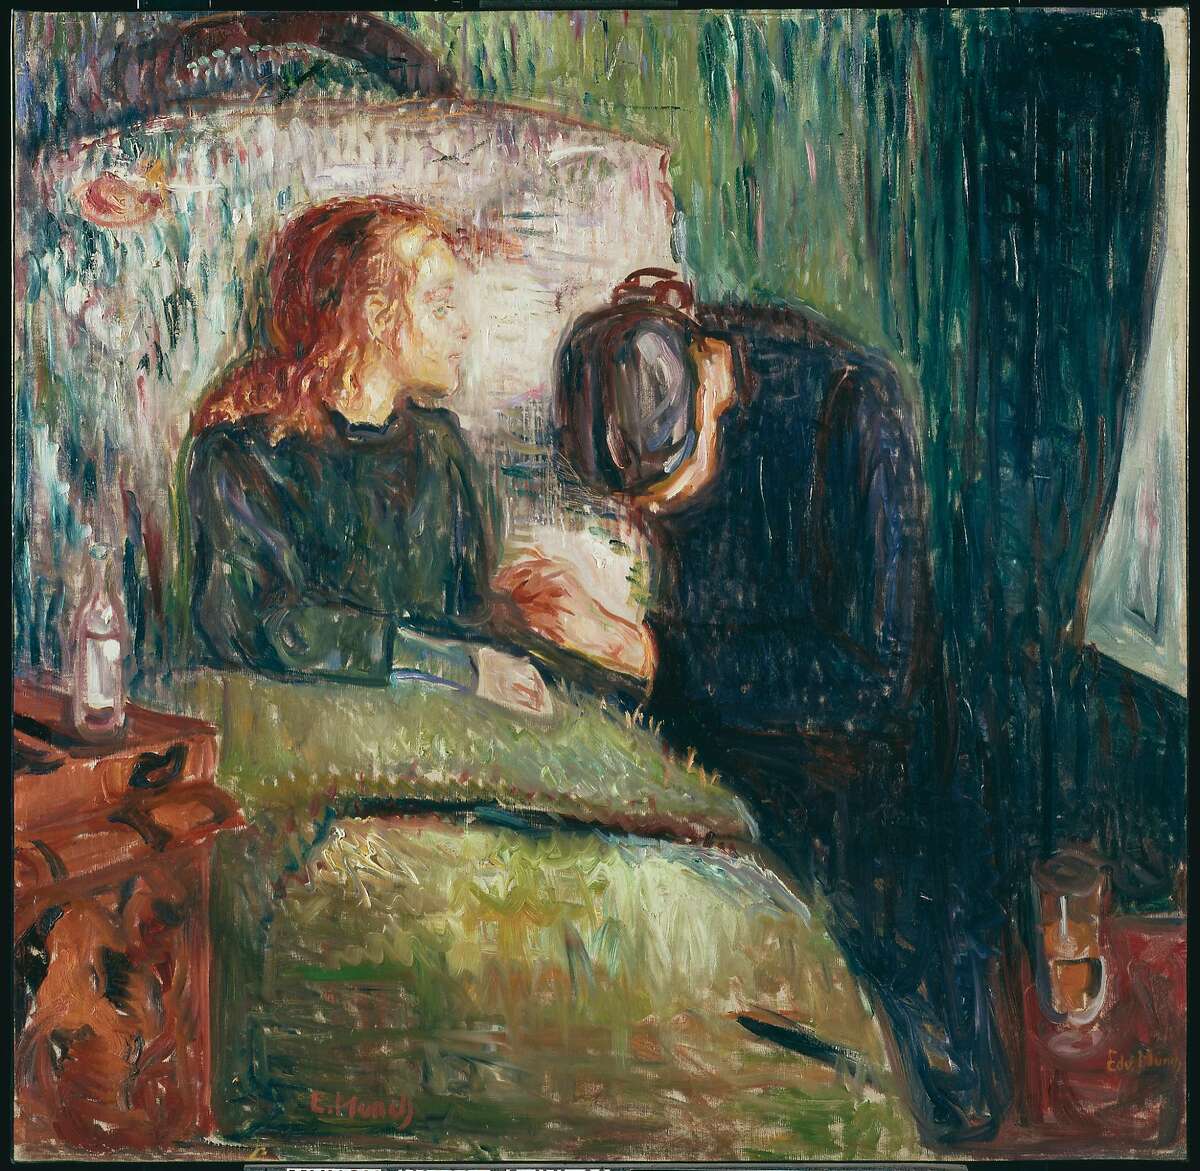 Edvard Munch, "The Sick Child" (1907)